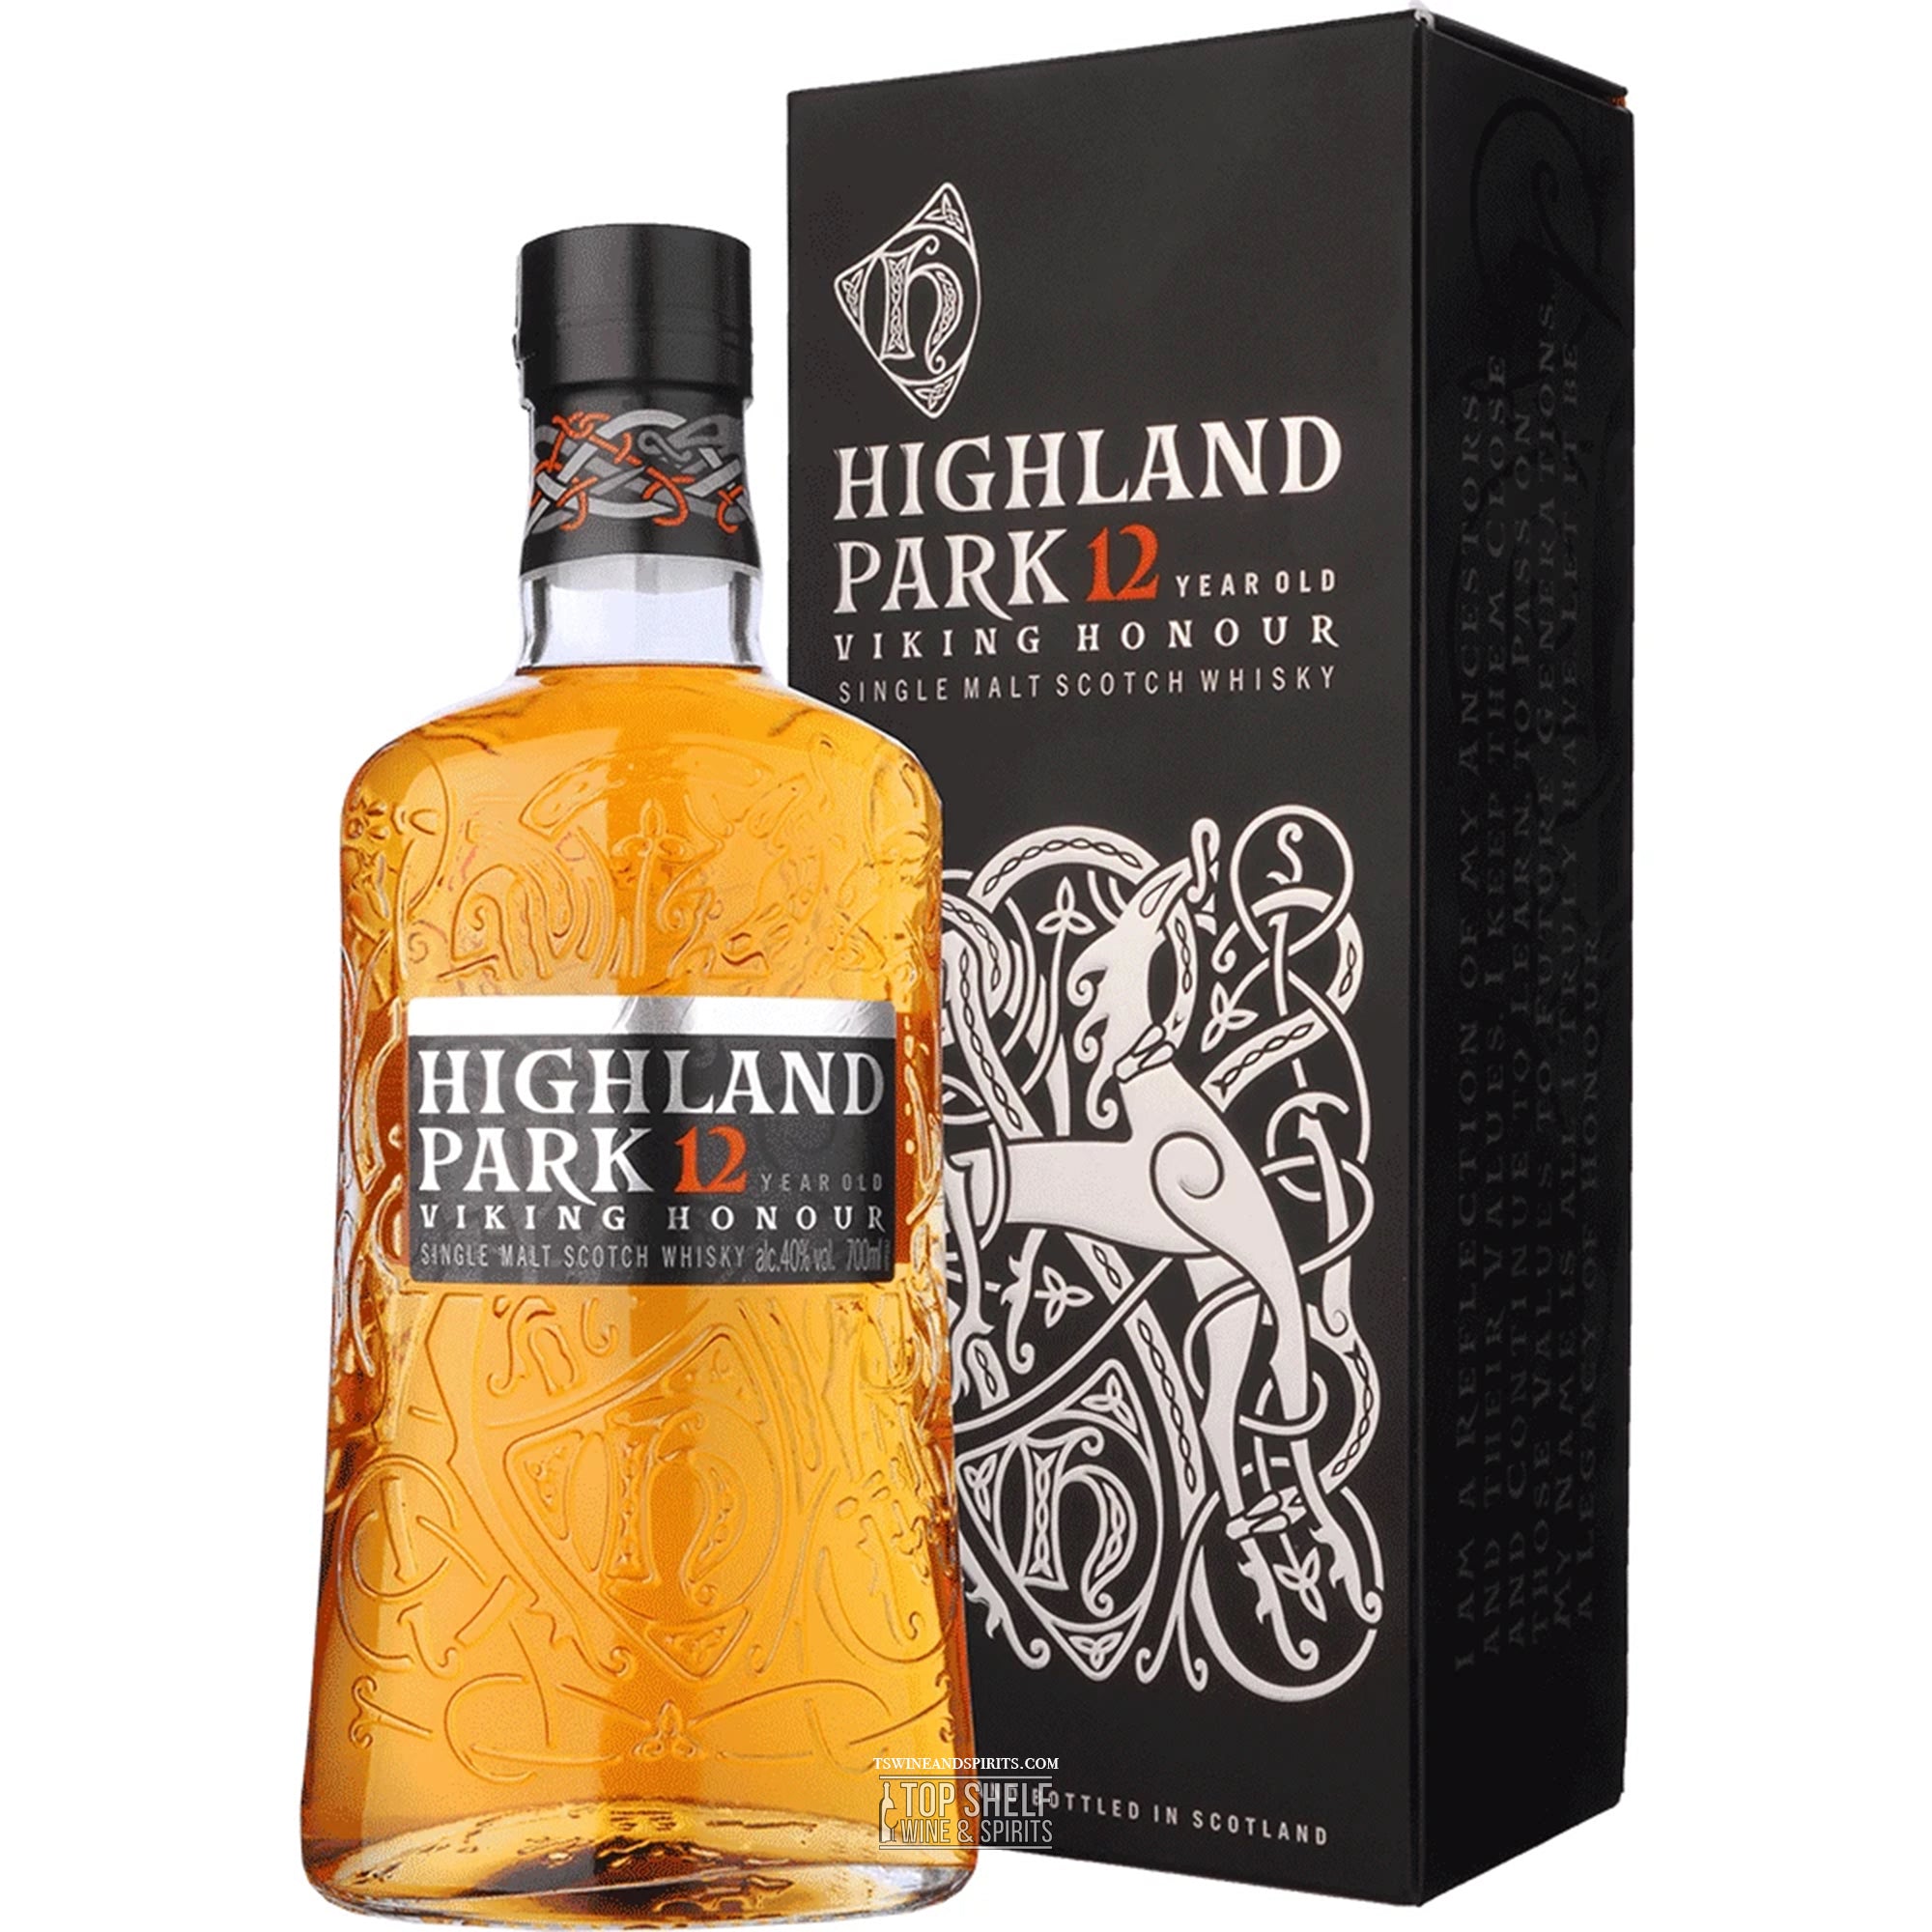 Highland Park 12 Year Old Single Malt Scotch Whisky - 750 ml bottle